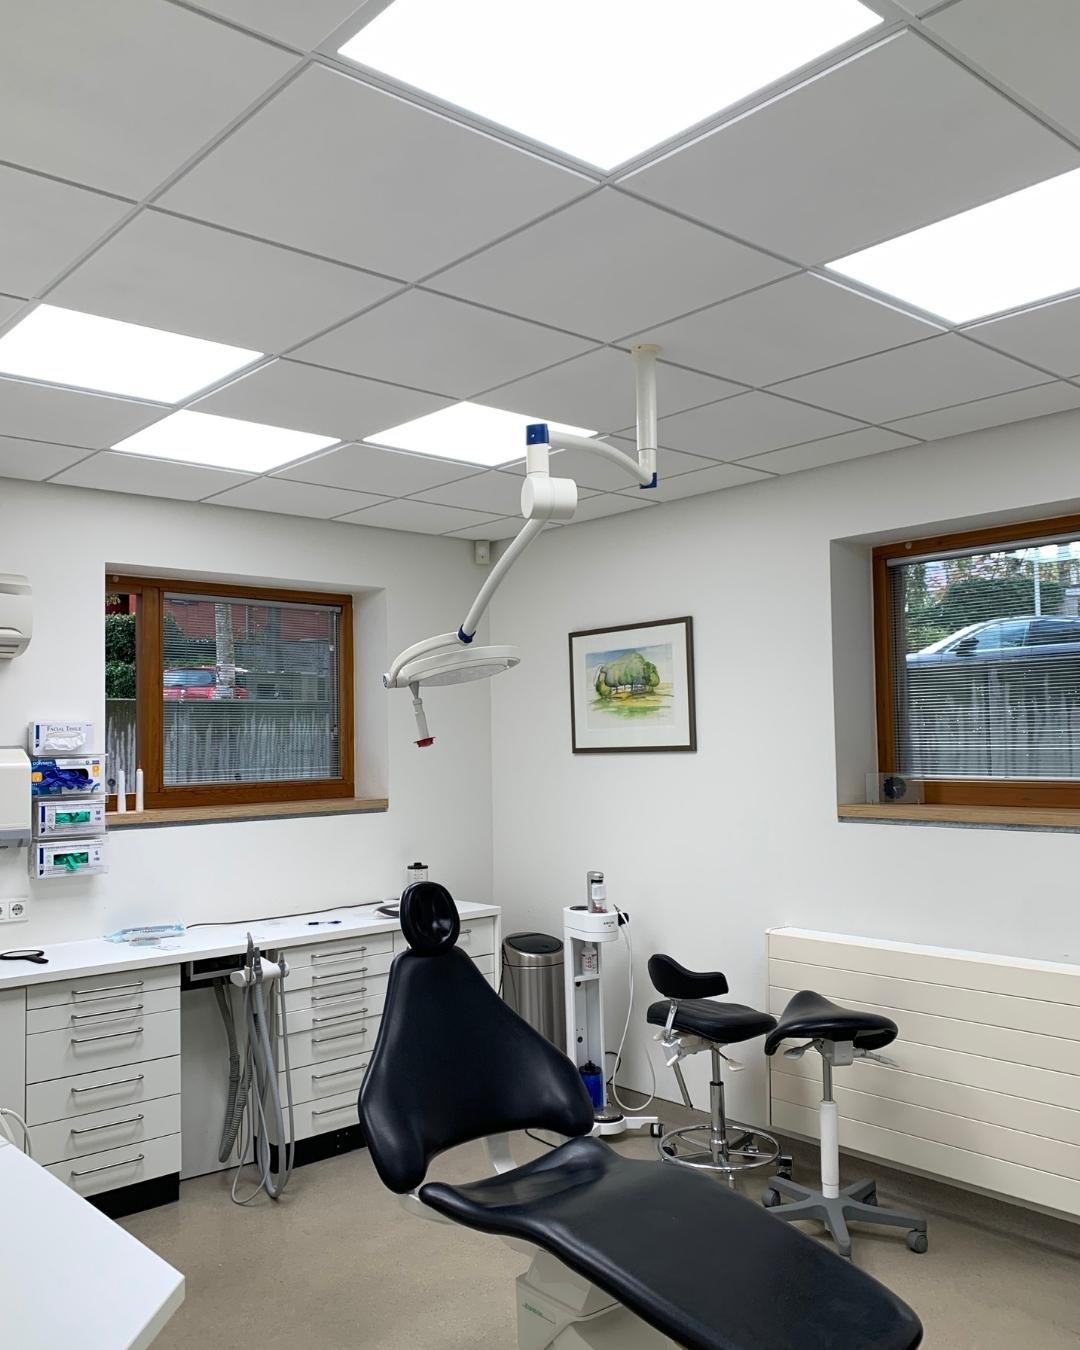 treatmentroom with Dentled lighting Full spectrum daylight